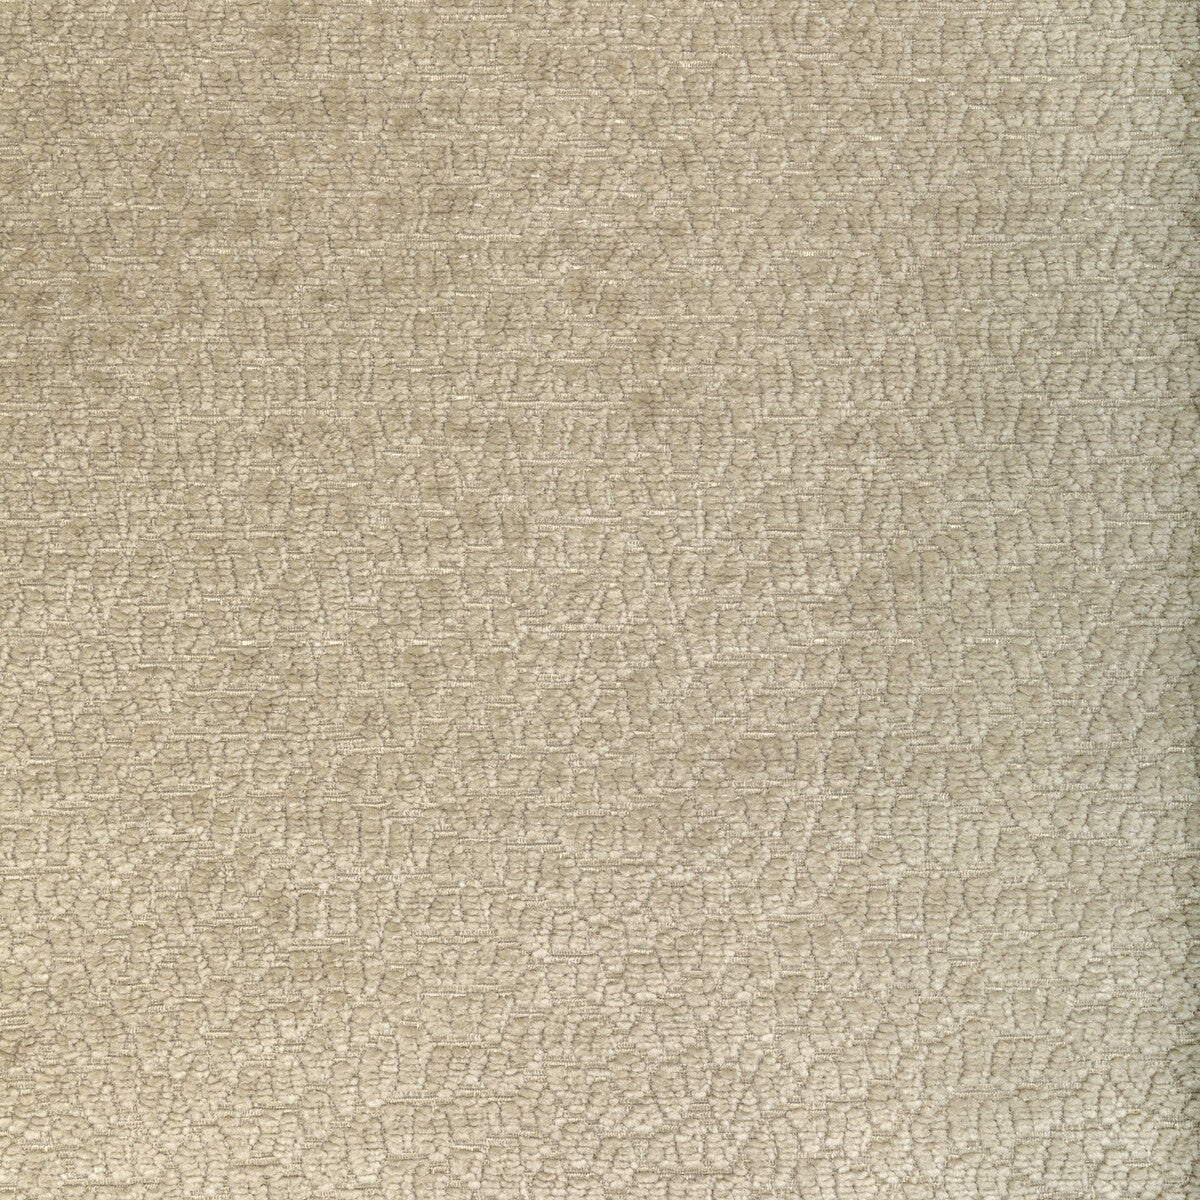 Kravet Smart fabric in 36606-1611 color - pattern 36606.1611.0 - by Kravet Smart in the Performance Kravetarmor collection